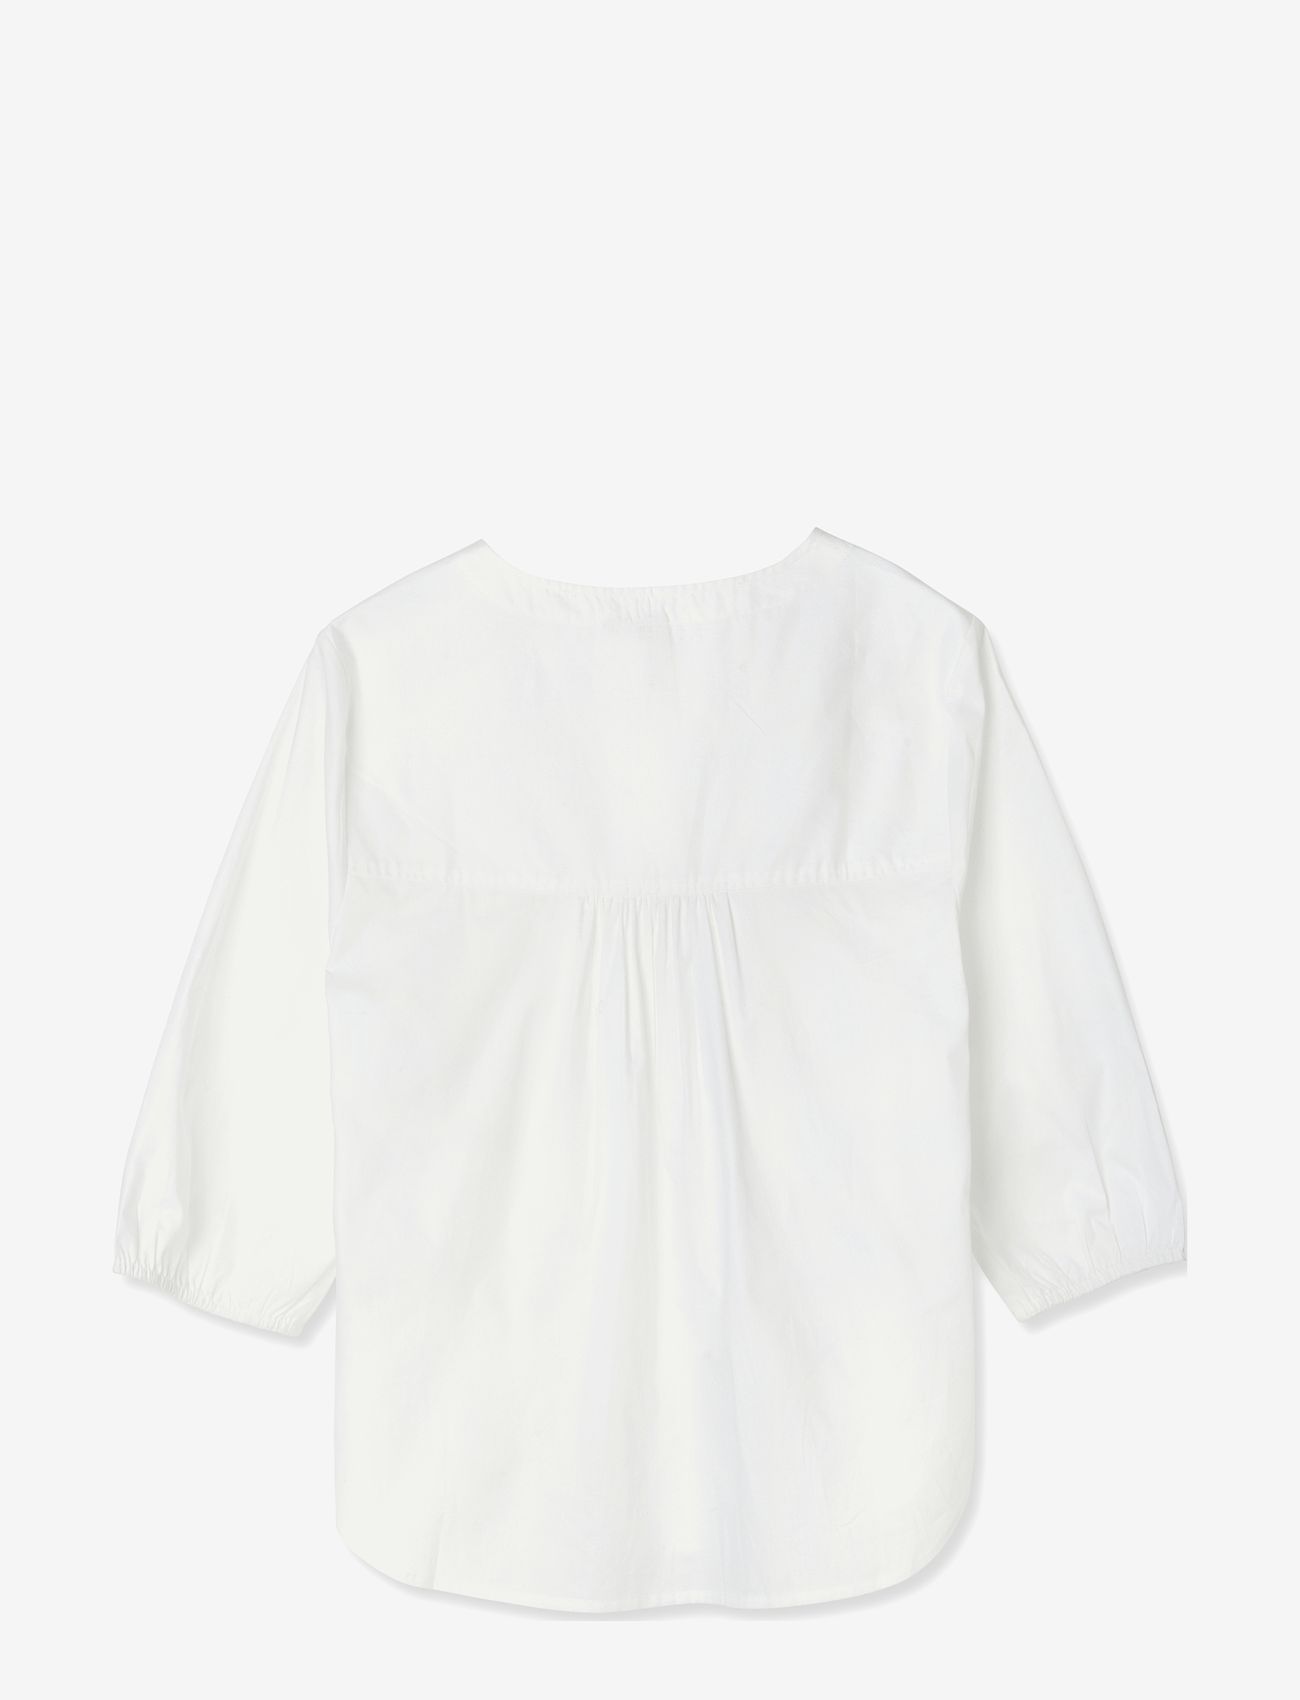 Juna - Soft Adele shirt - women - white - 1